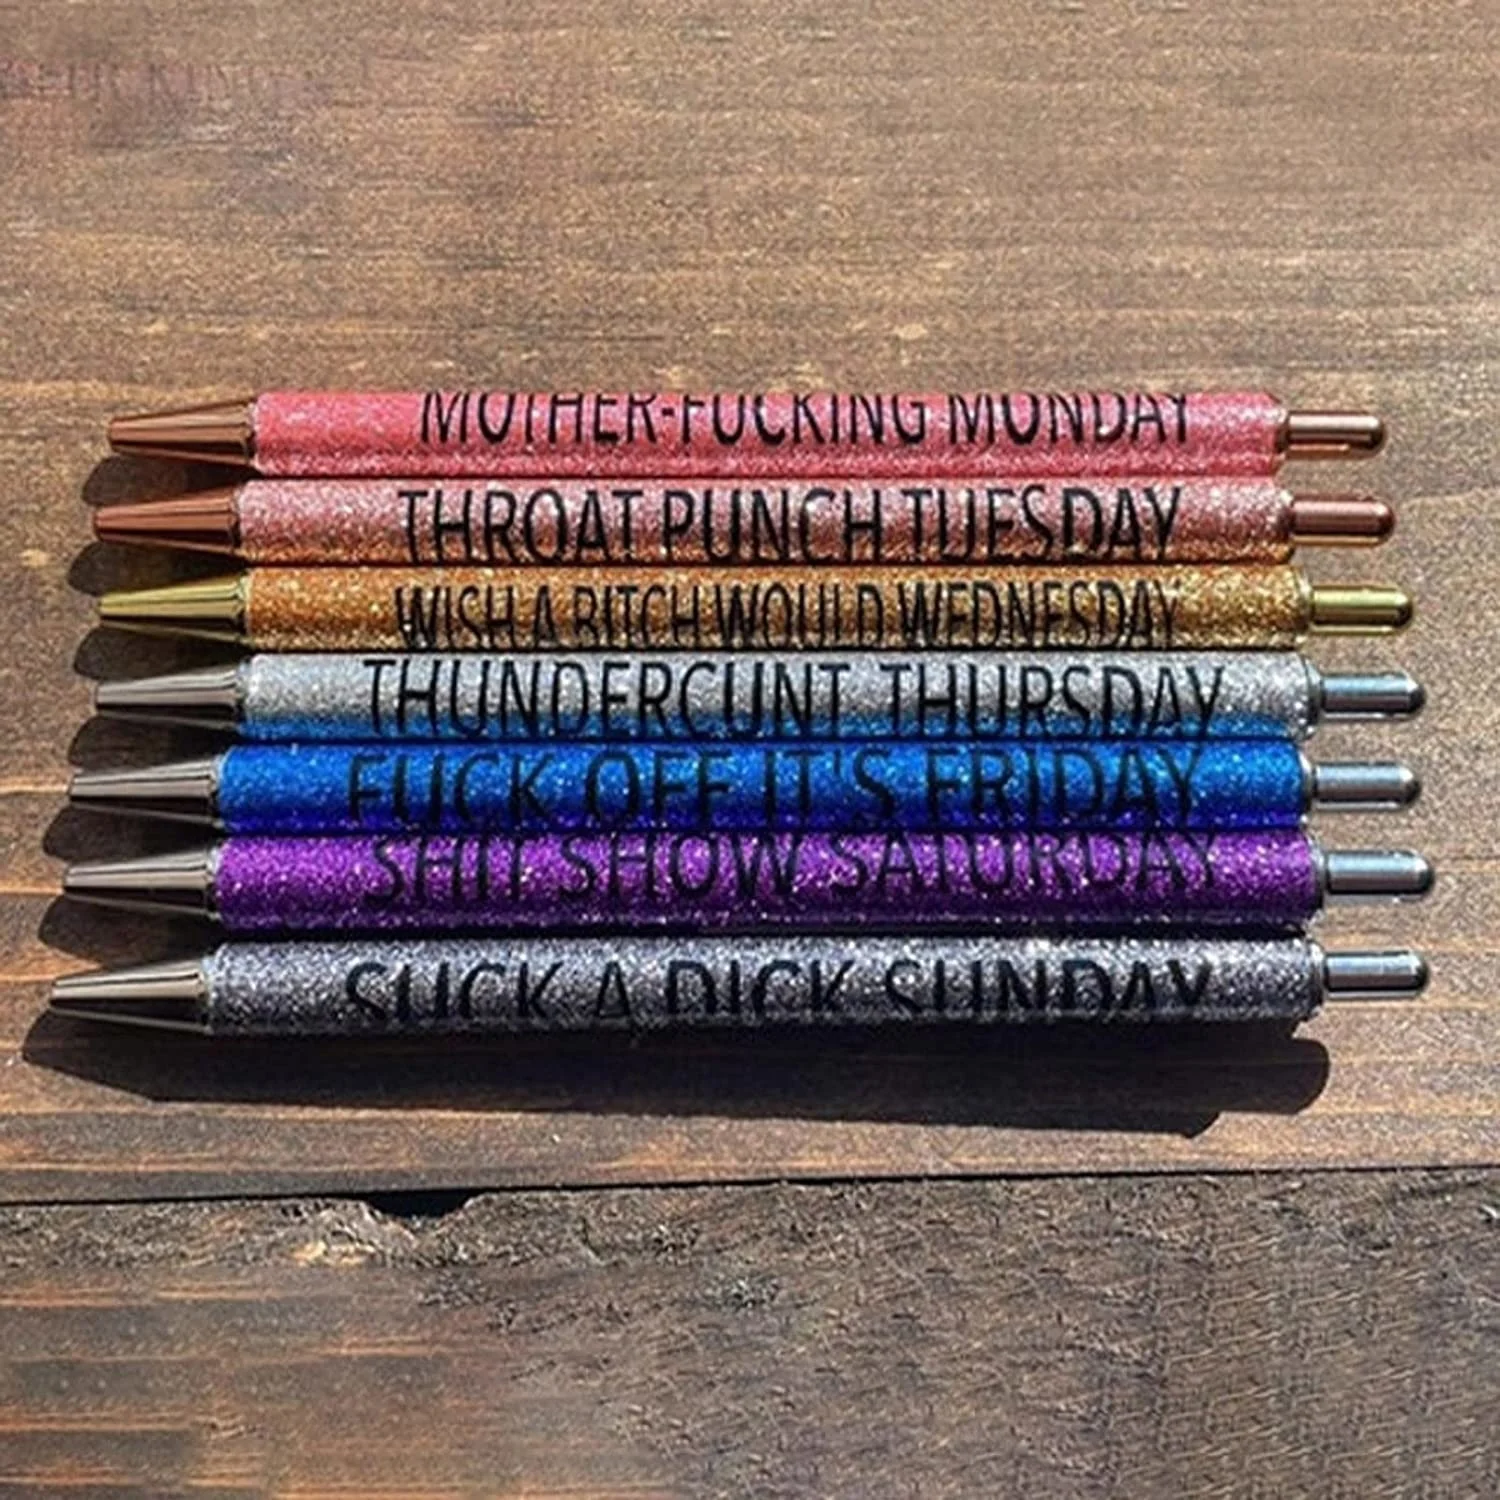 https://ae01.alicdn.com/kf/S0528070f14fc4ee89179b852efcea4e1y/7PCS-Funny-Pens-Swear-Mood-Word-Daily-Pen-Set-Weekday-Vibes-Glitter-Pen-Set-for-Each.jpg